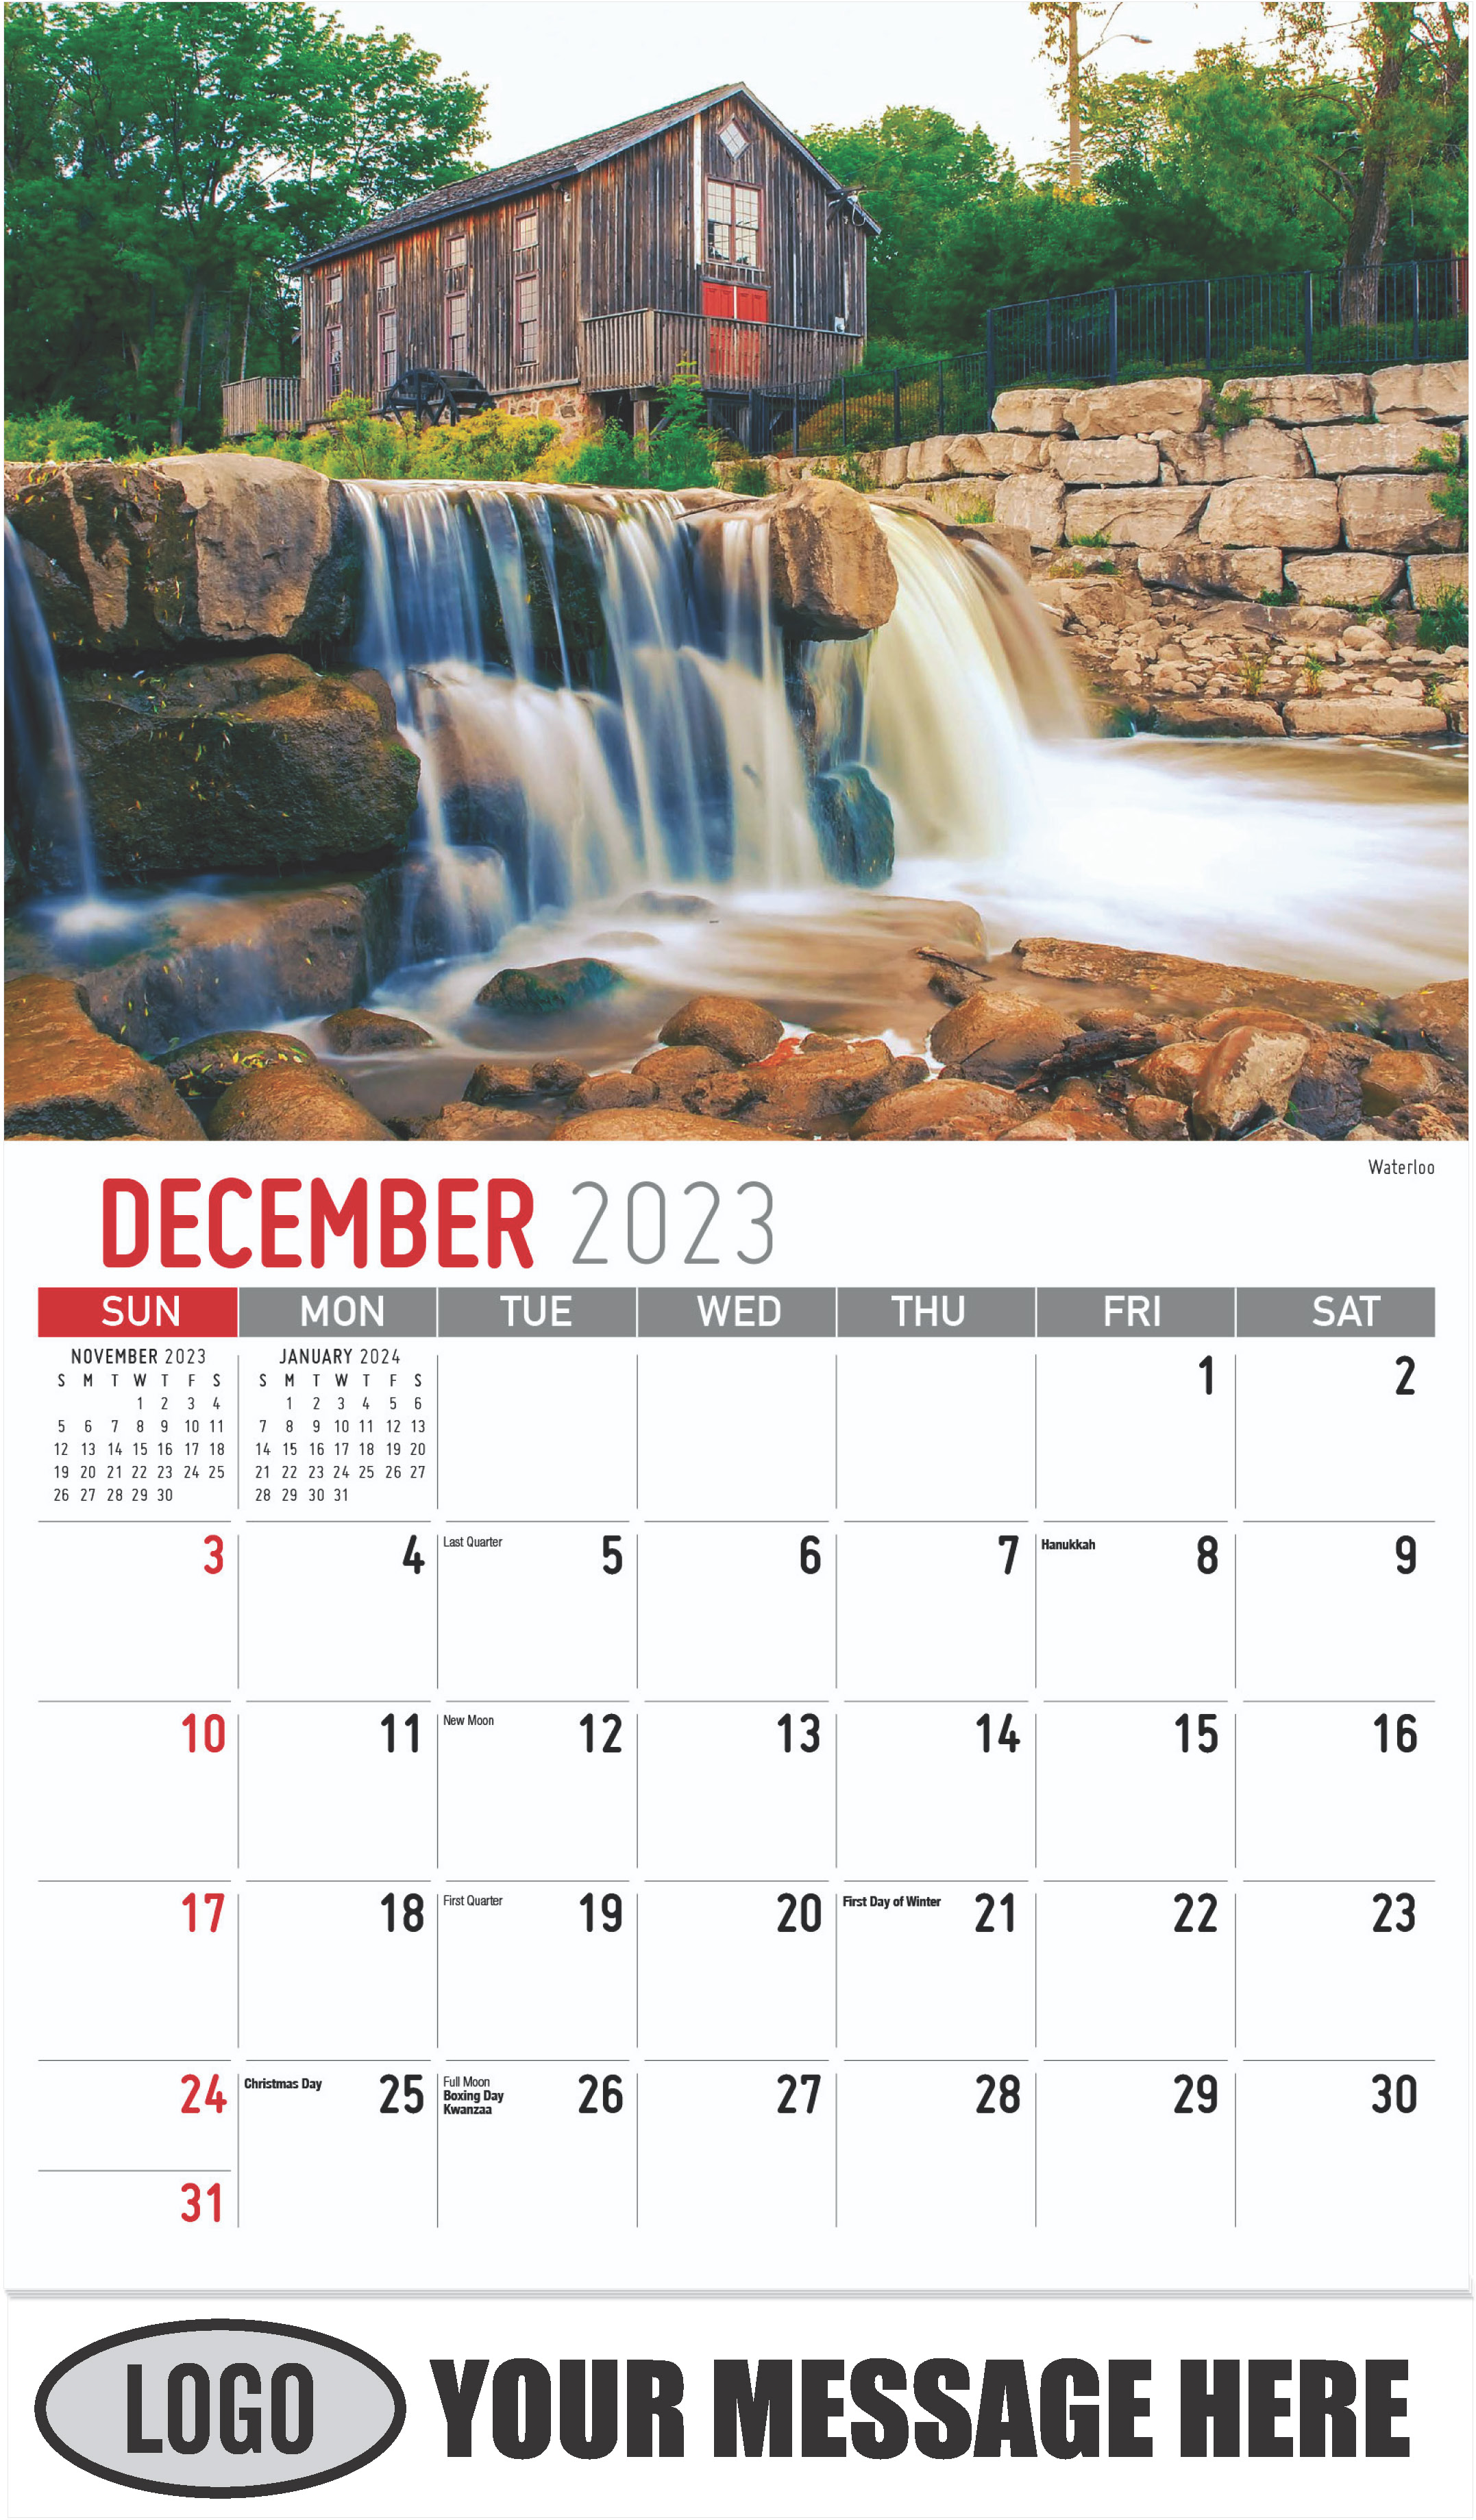 Waterloo - December 2023 - Scenes of Ontario 2023 Promotional Calendar